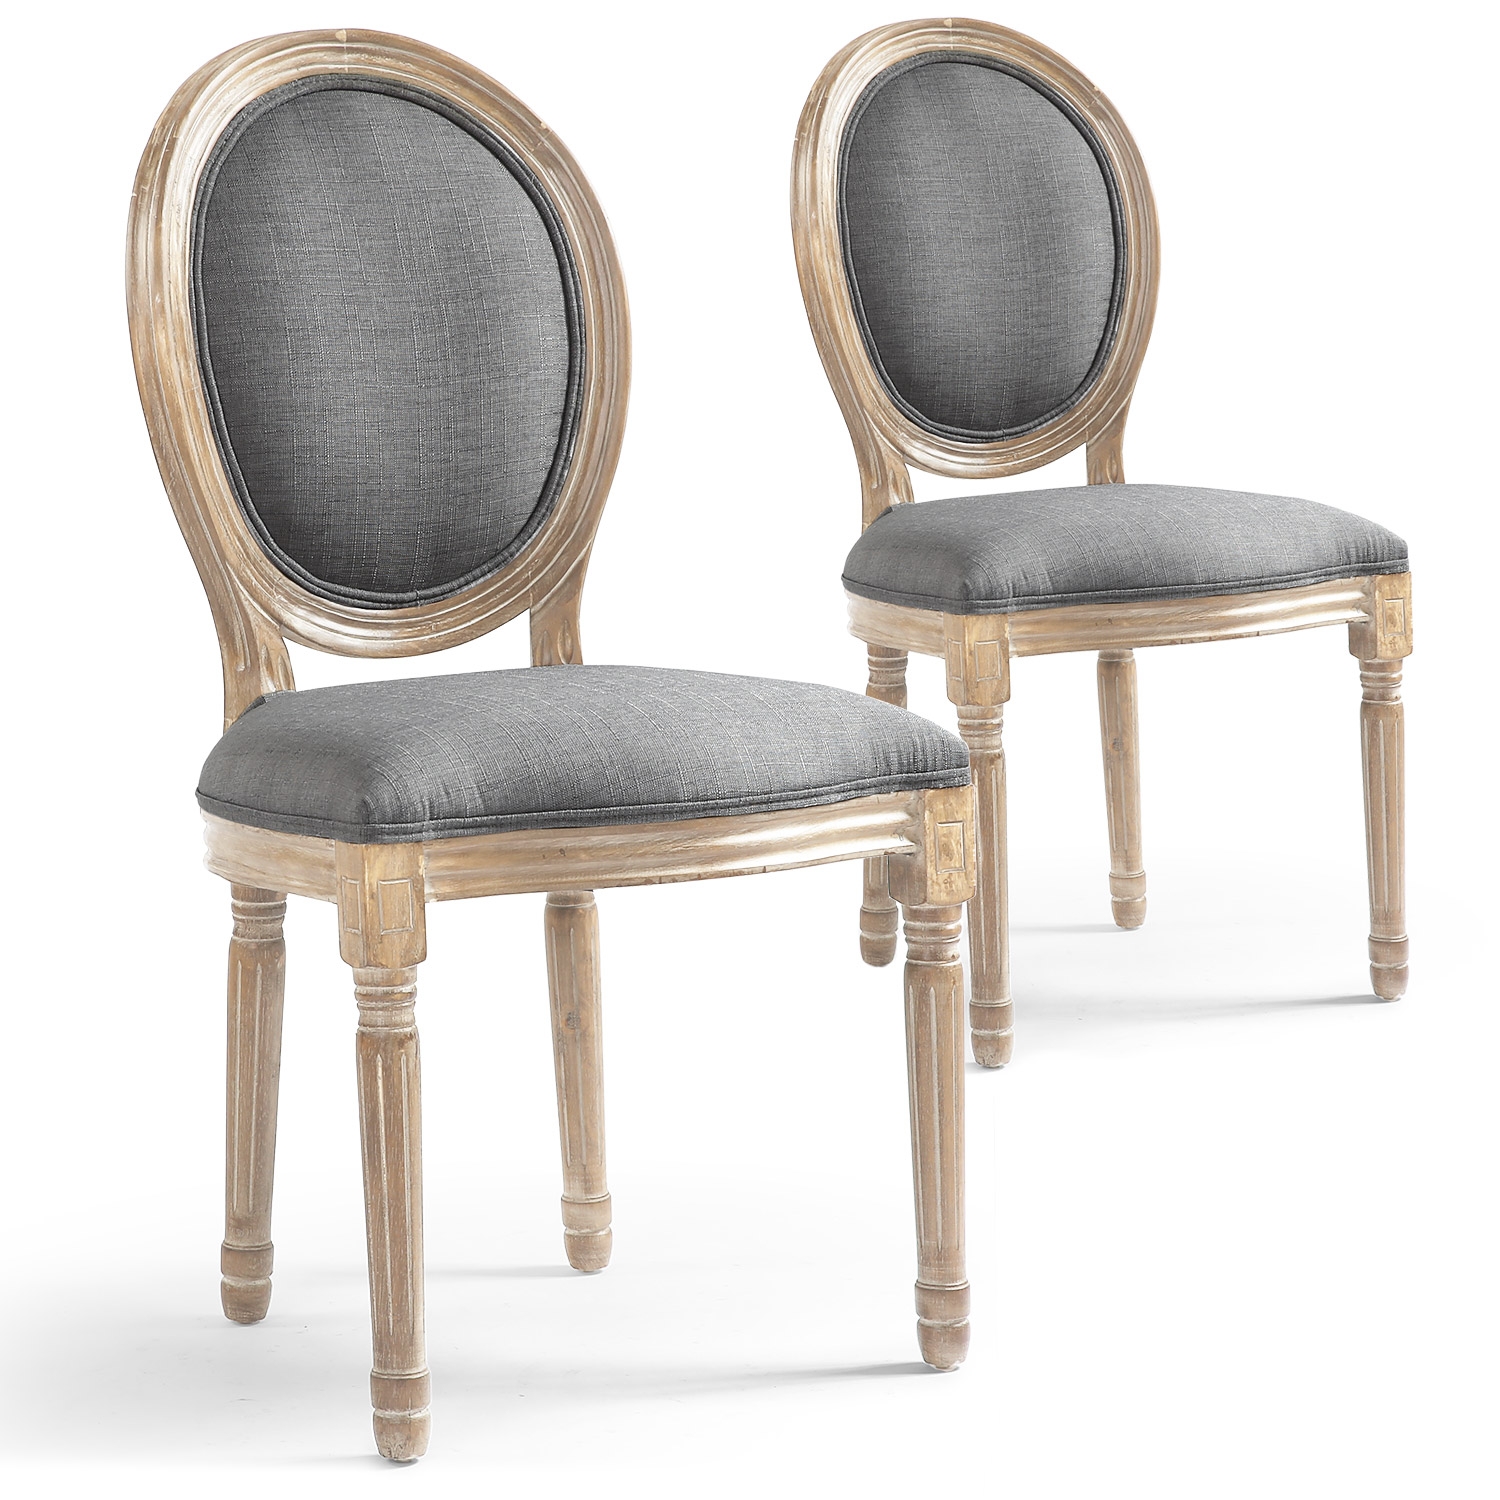 La chaise médaillon Louis XVI tissu gris clair